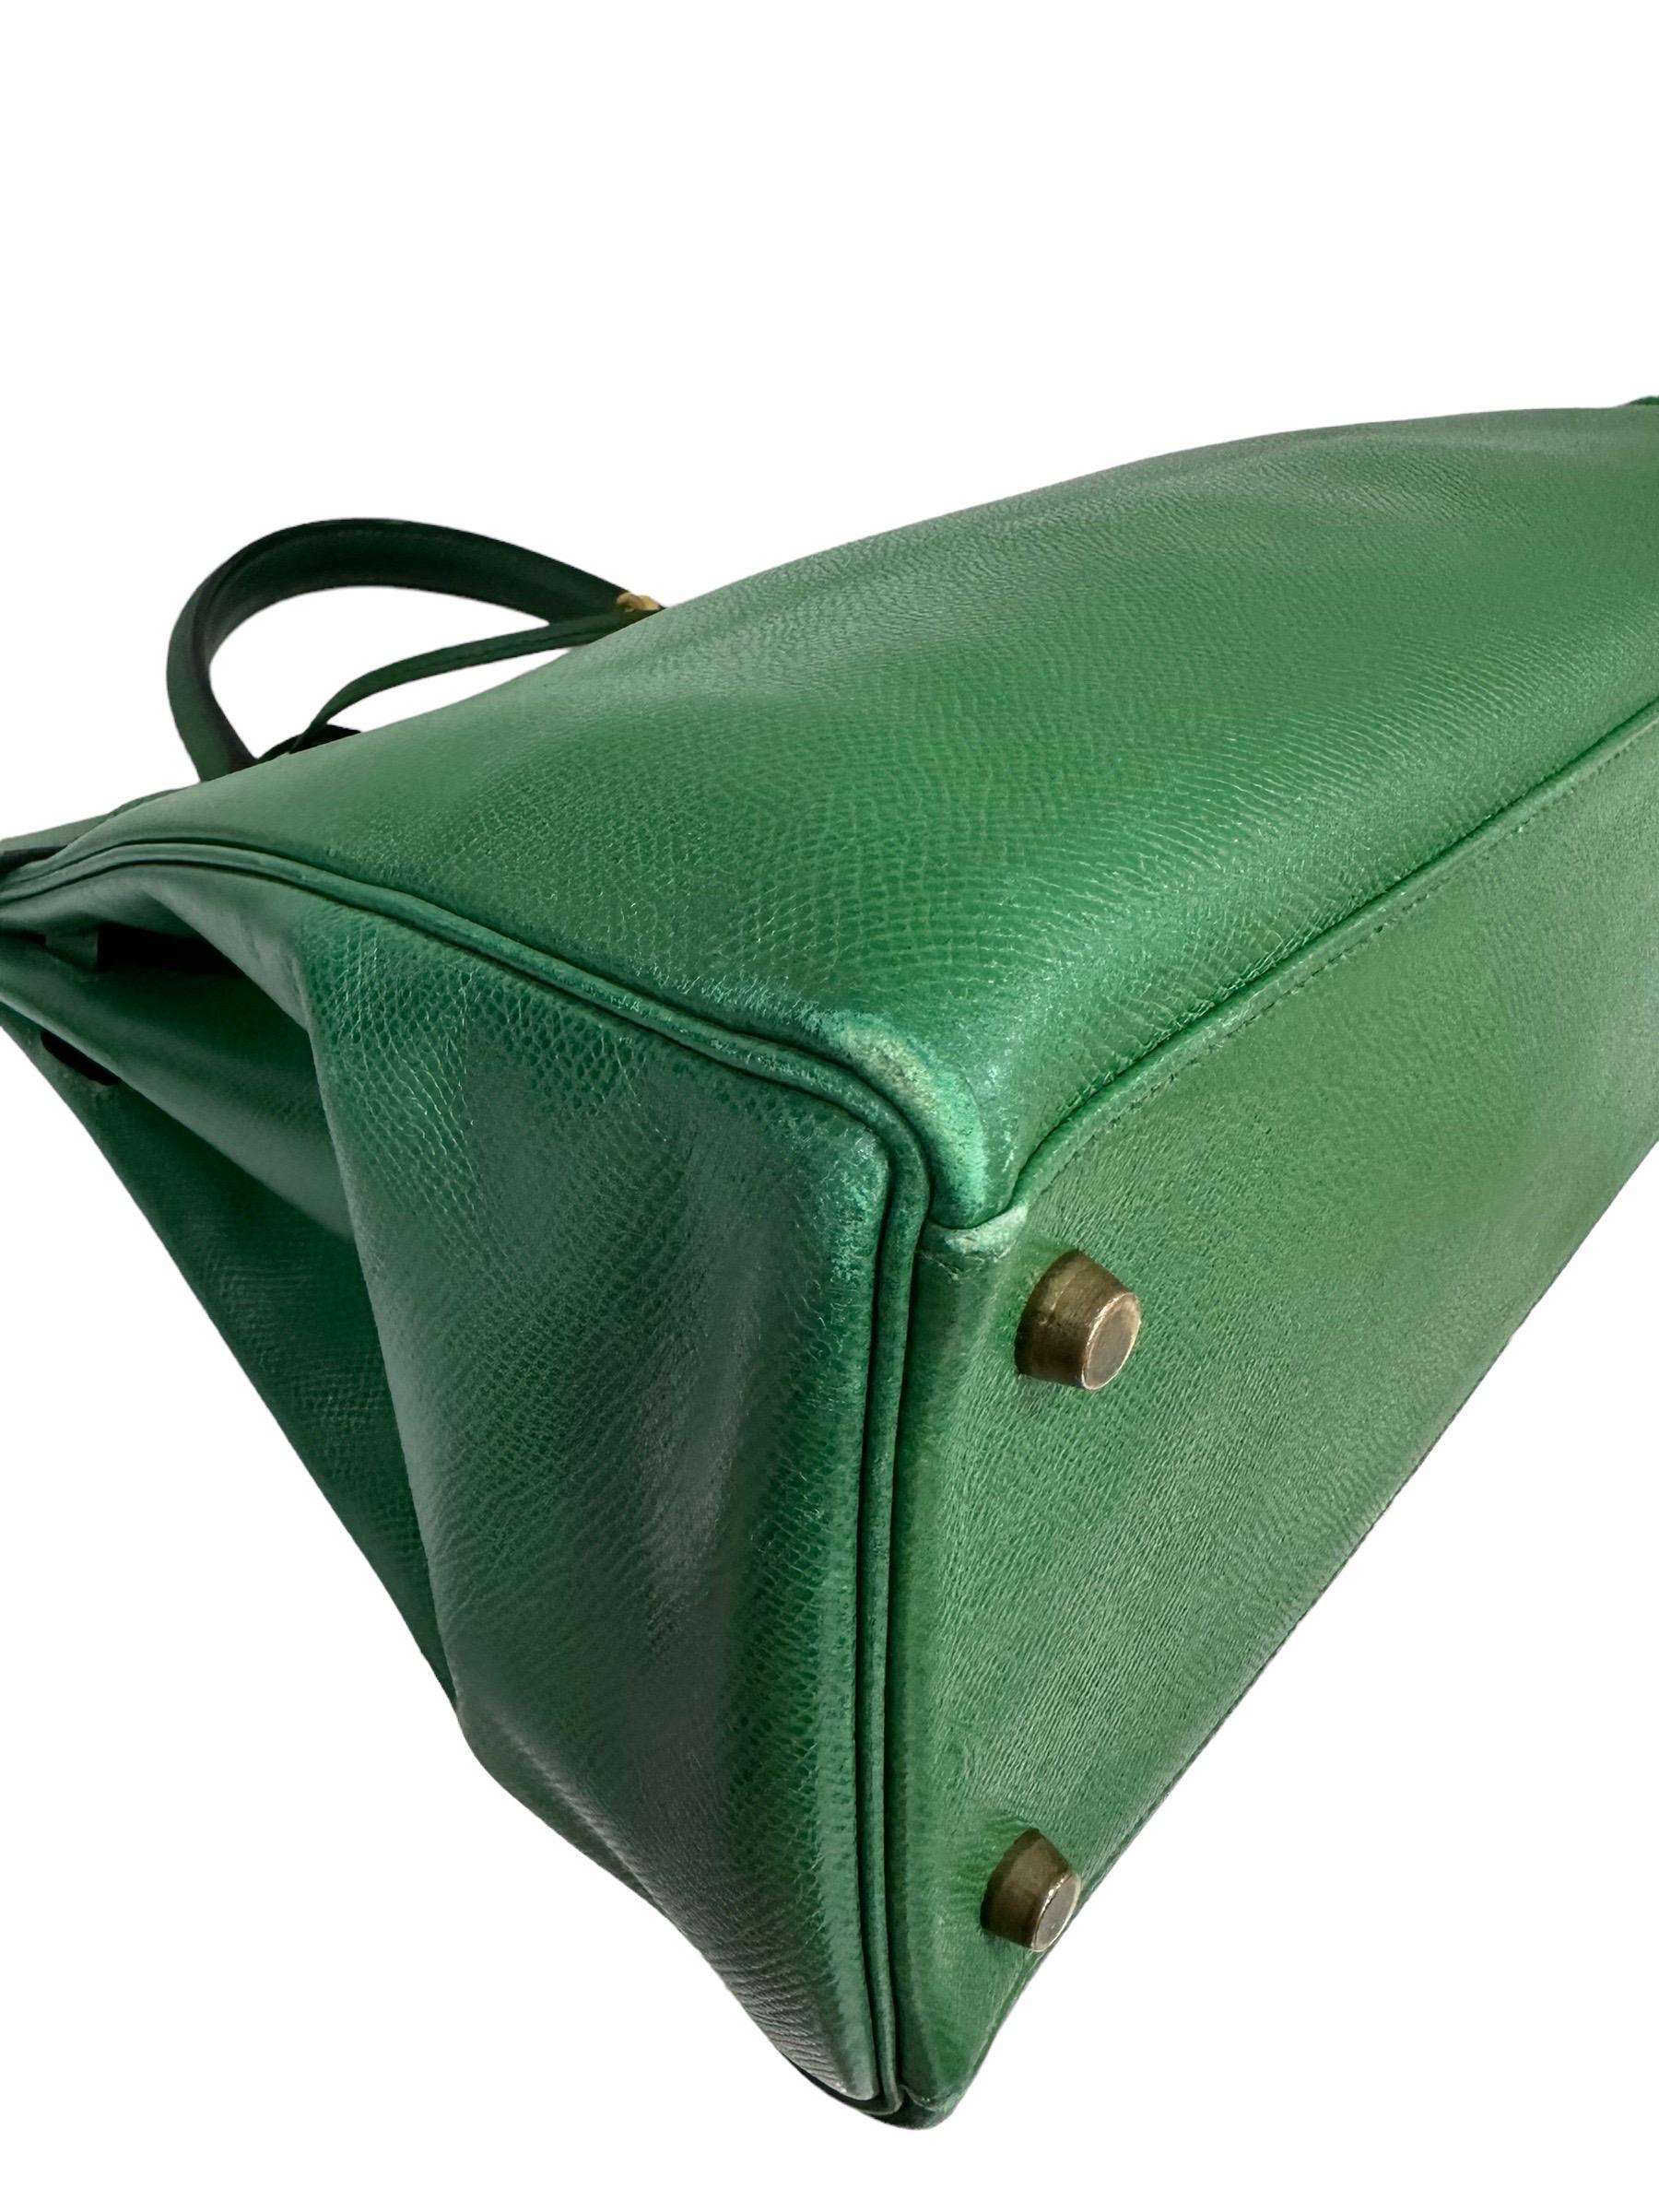 Hermès Kelly 35 Epsom Leather Vert Bengale Top Handle Bag 3